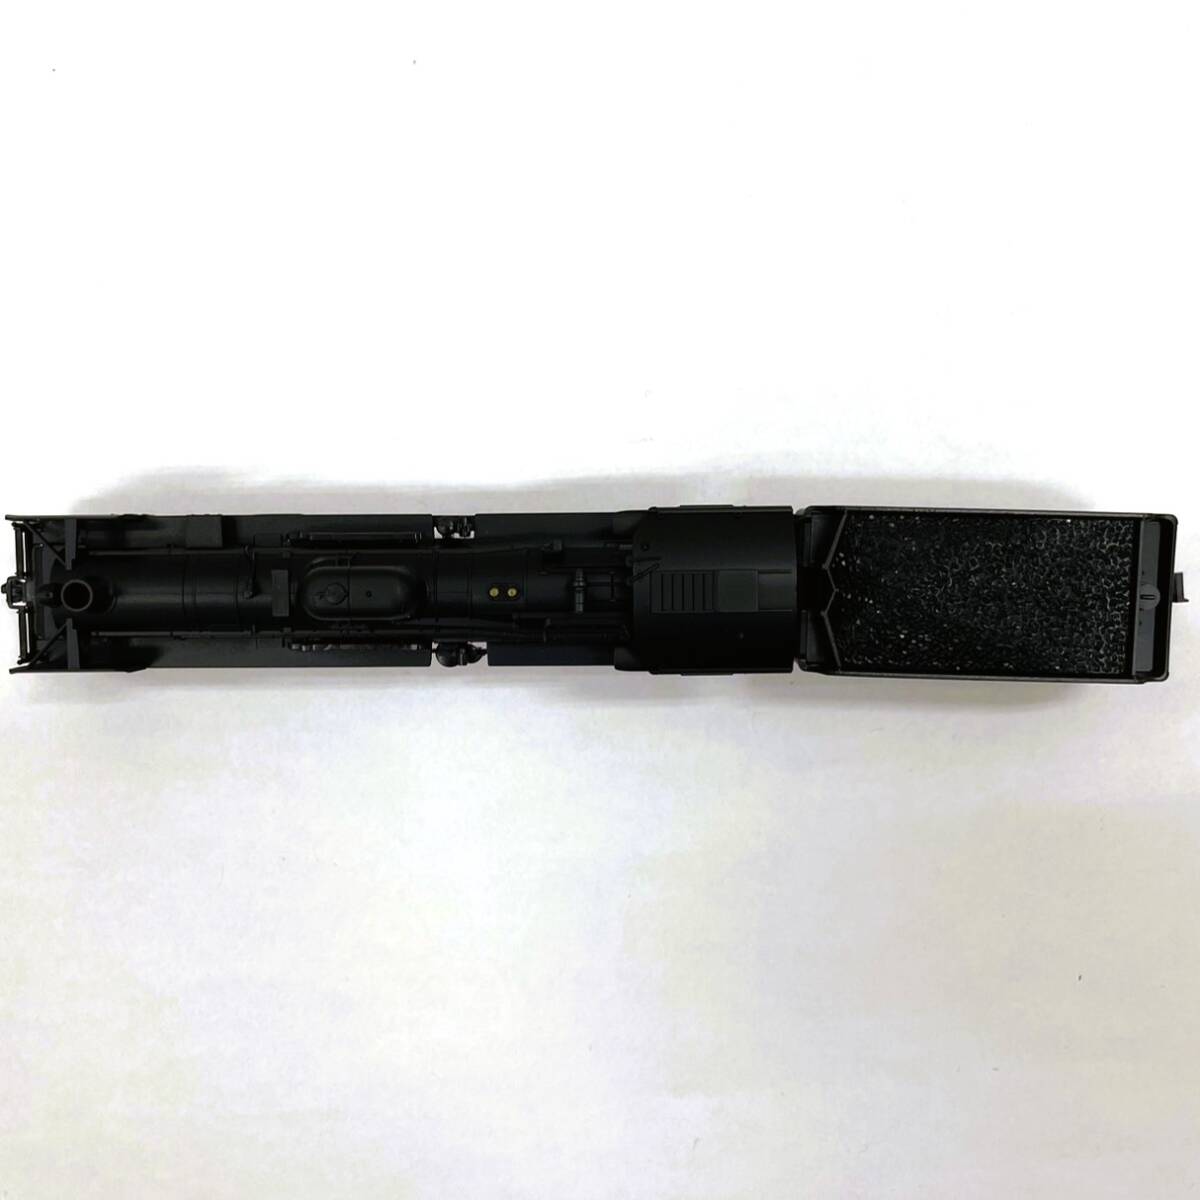 *[KATO/ Kato ] N gauge 2011 C55 steam locomotiv black / black color railroad model toy toy antique collection *15425